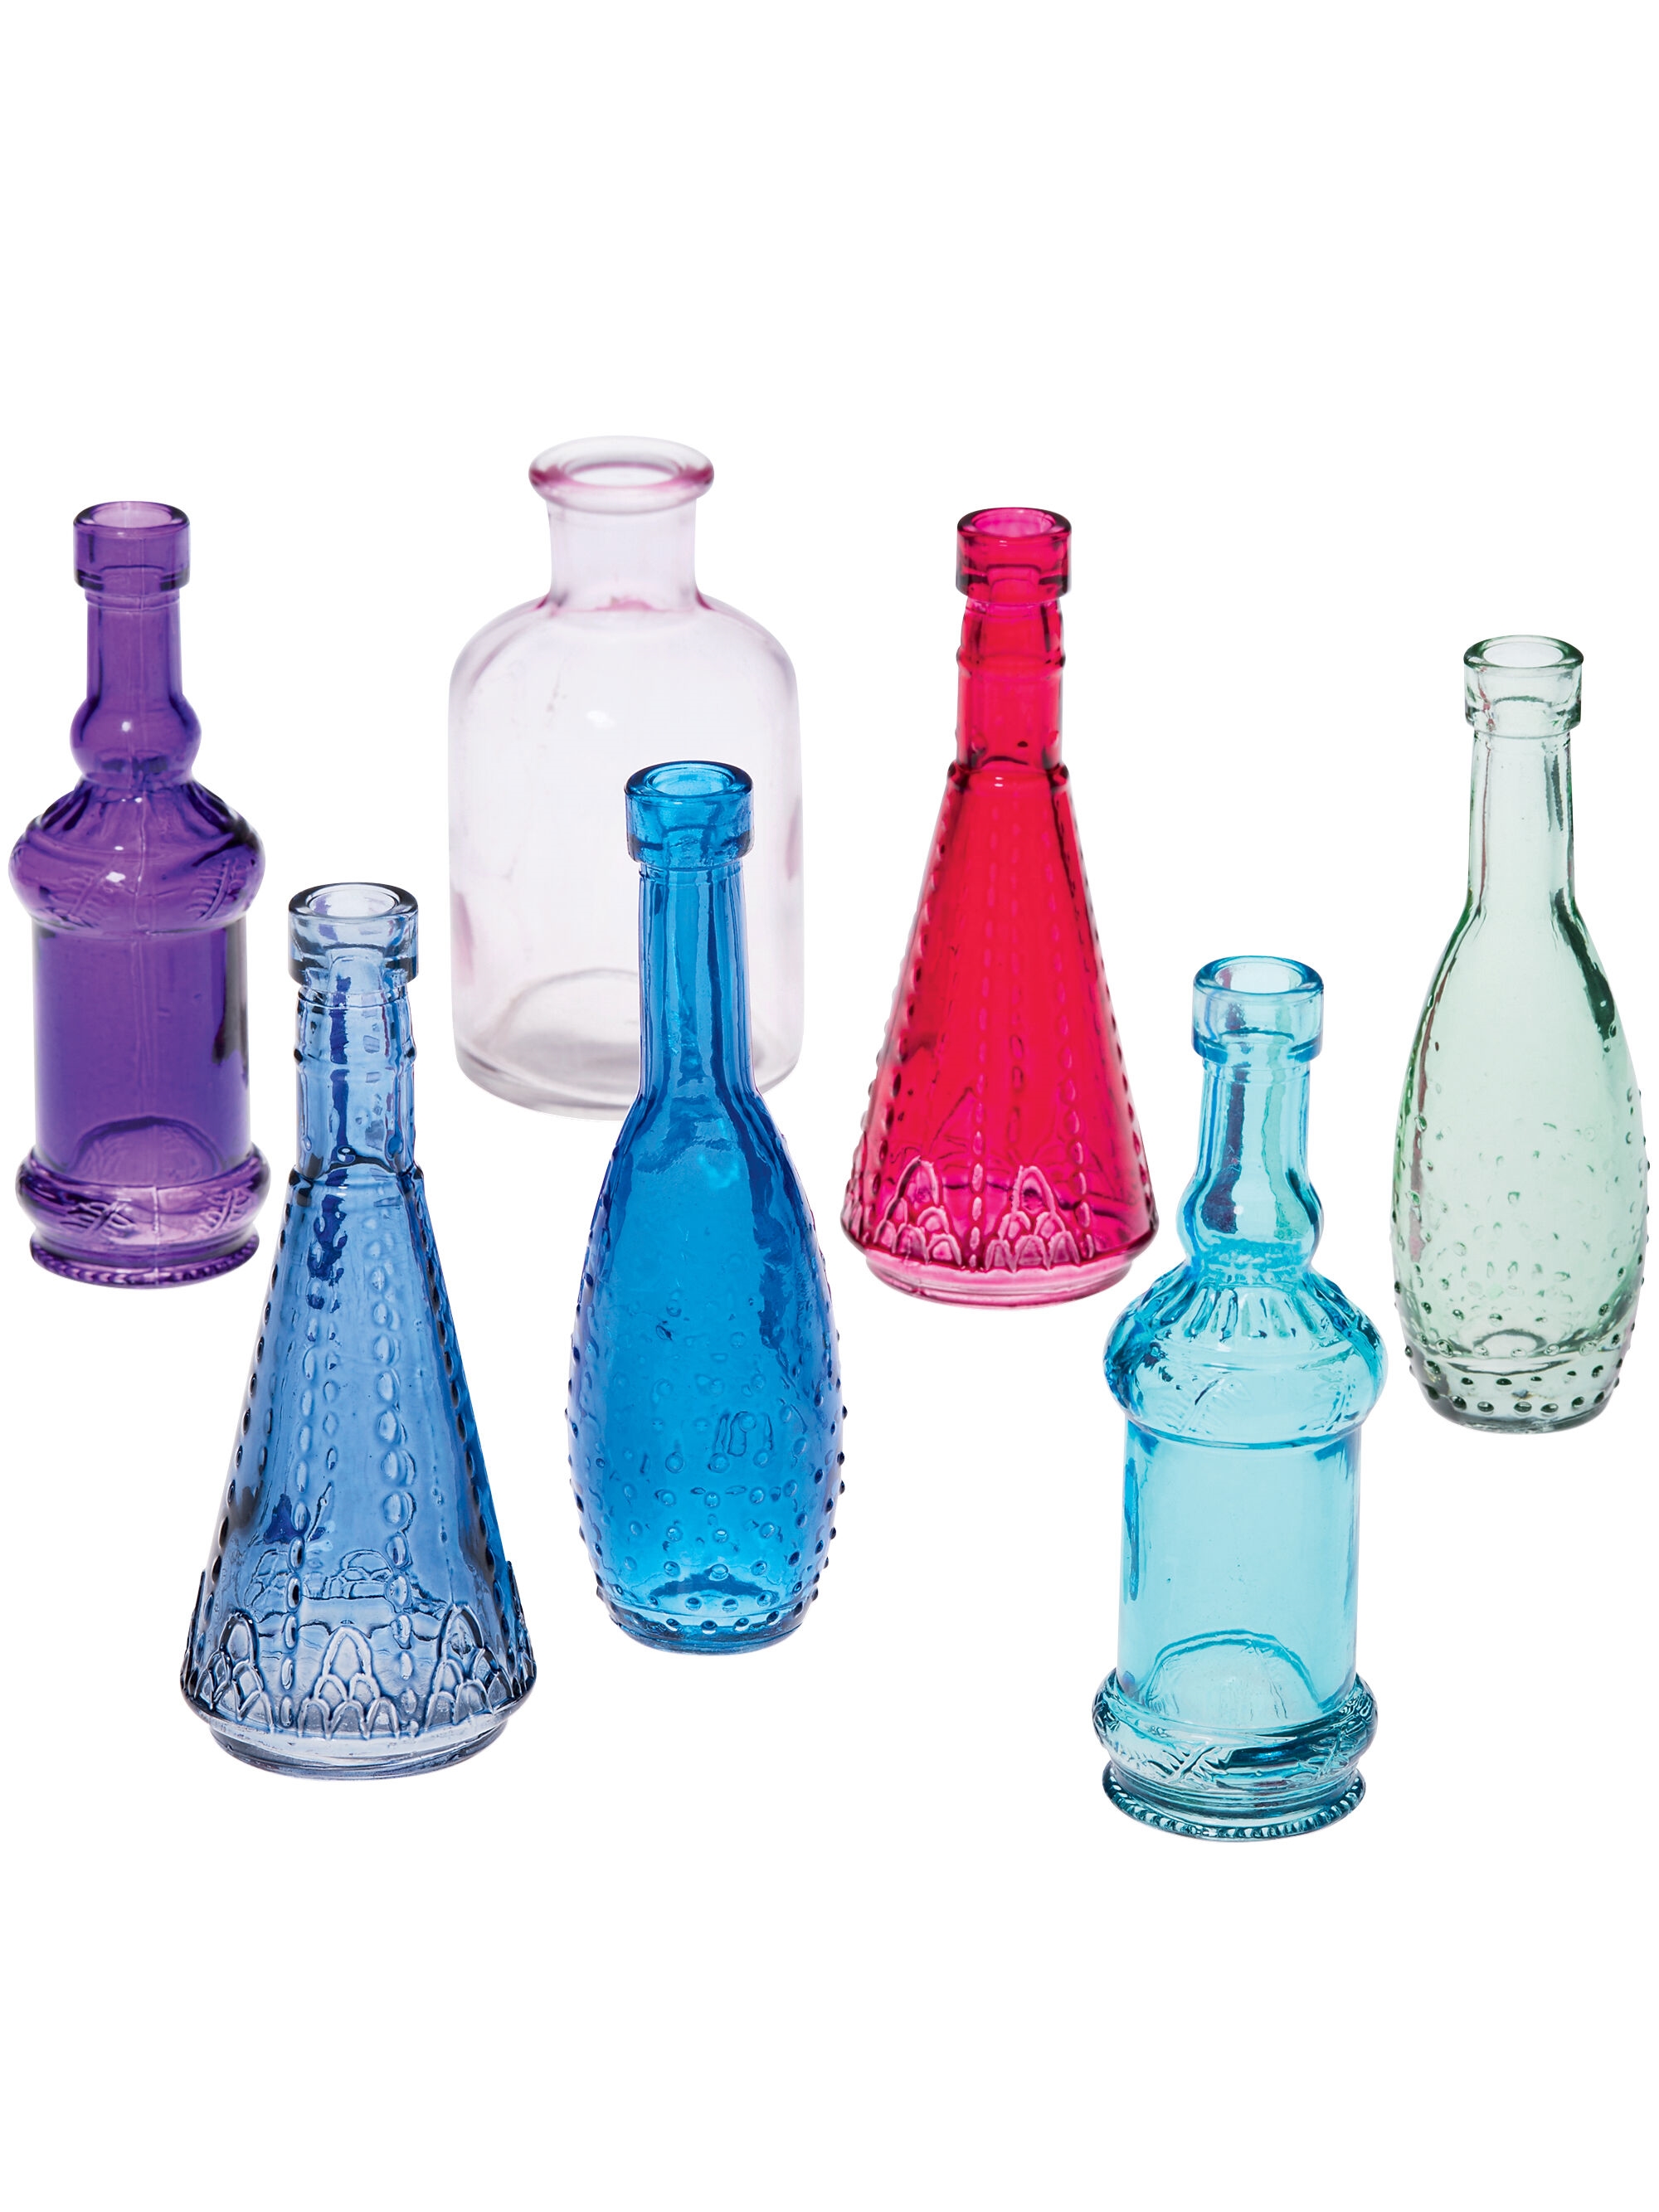 https://www.gardeners.com/globalassets/product-media-catalog/8591/800-899/8591801/8591801_2627_small-glass-bottles-decorative-colored-glass.jpg